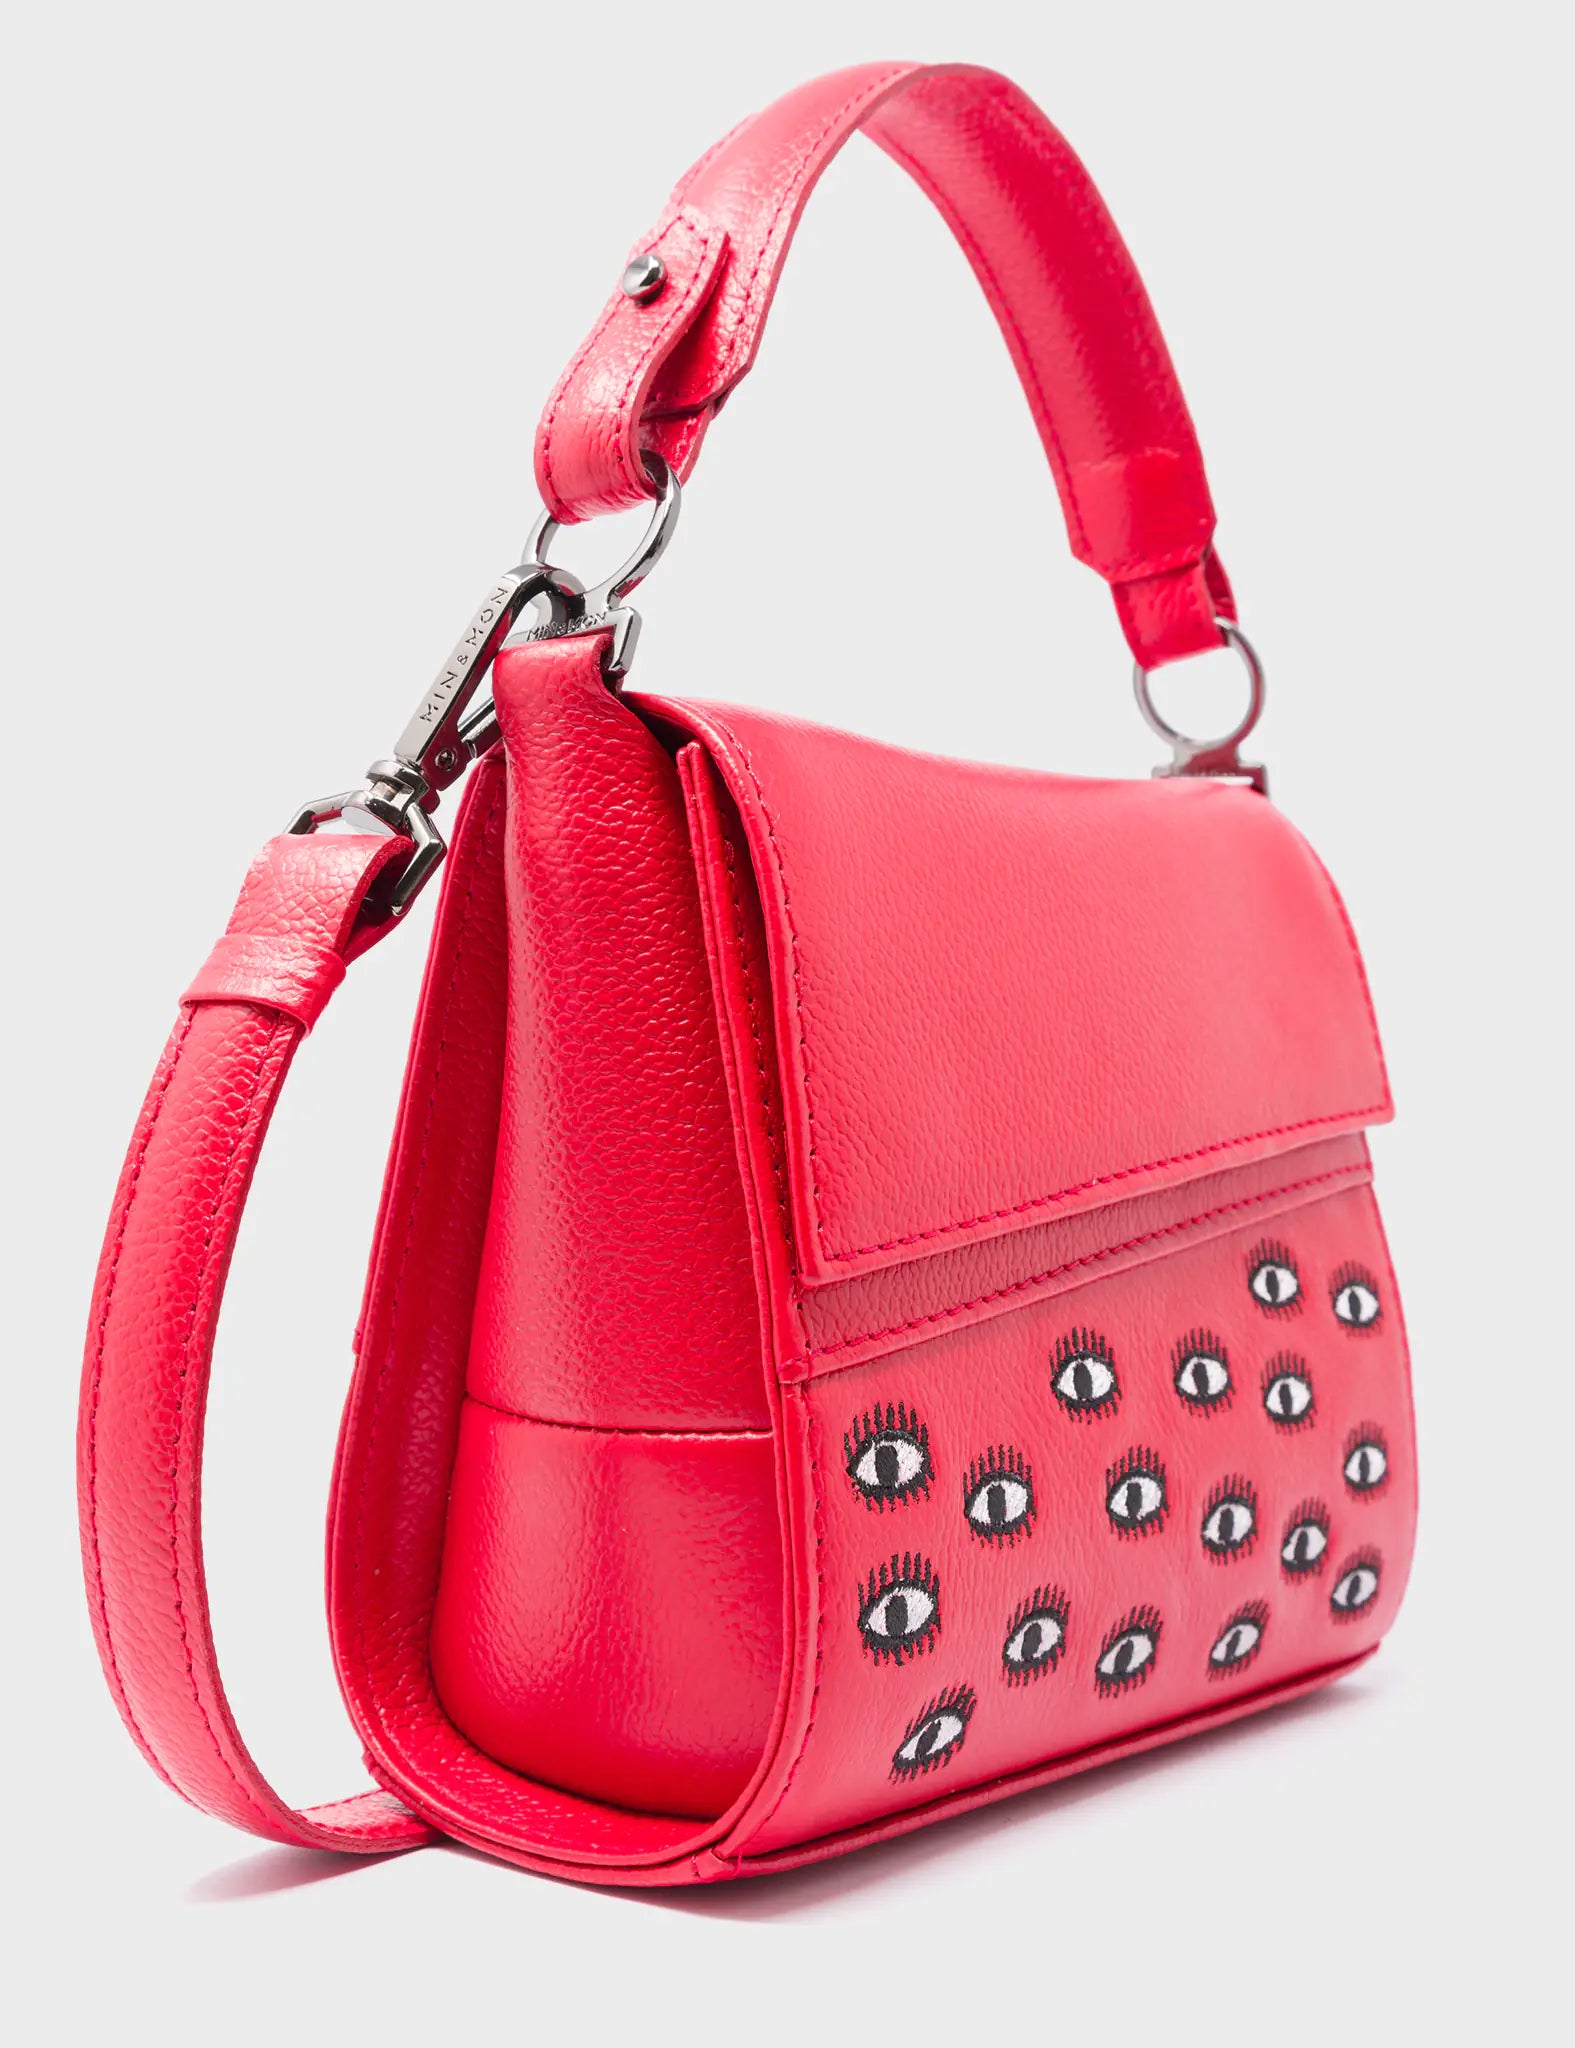 Anastasio Micro Crossbody Handbag Red Leather - Eyes Embroidery - Side View